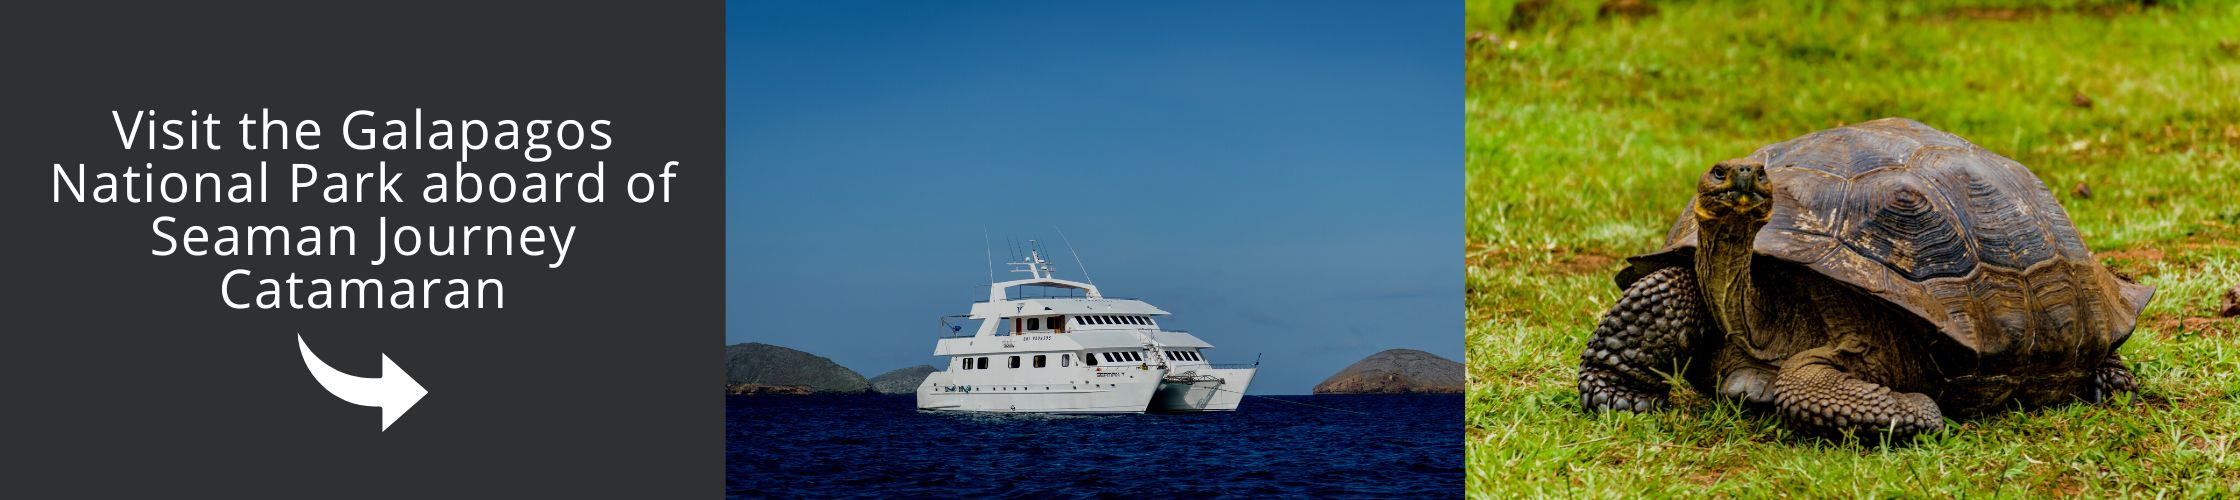 Visit the Galapagos National Park aboard of Seaman Journey Catamaran